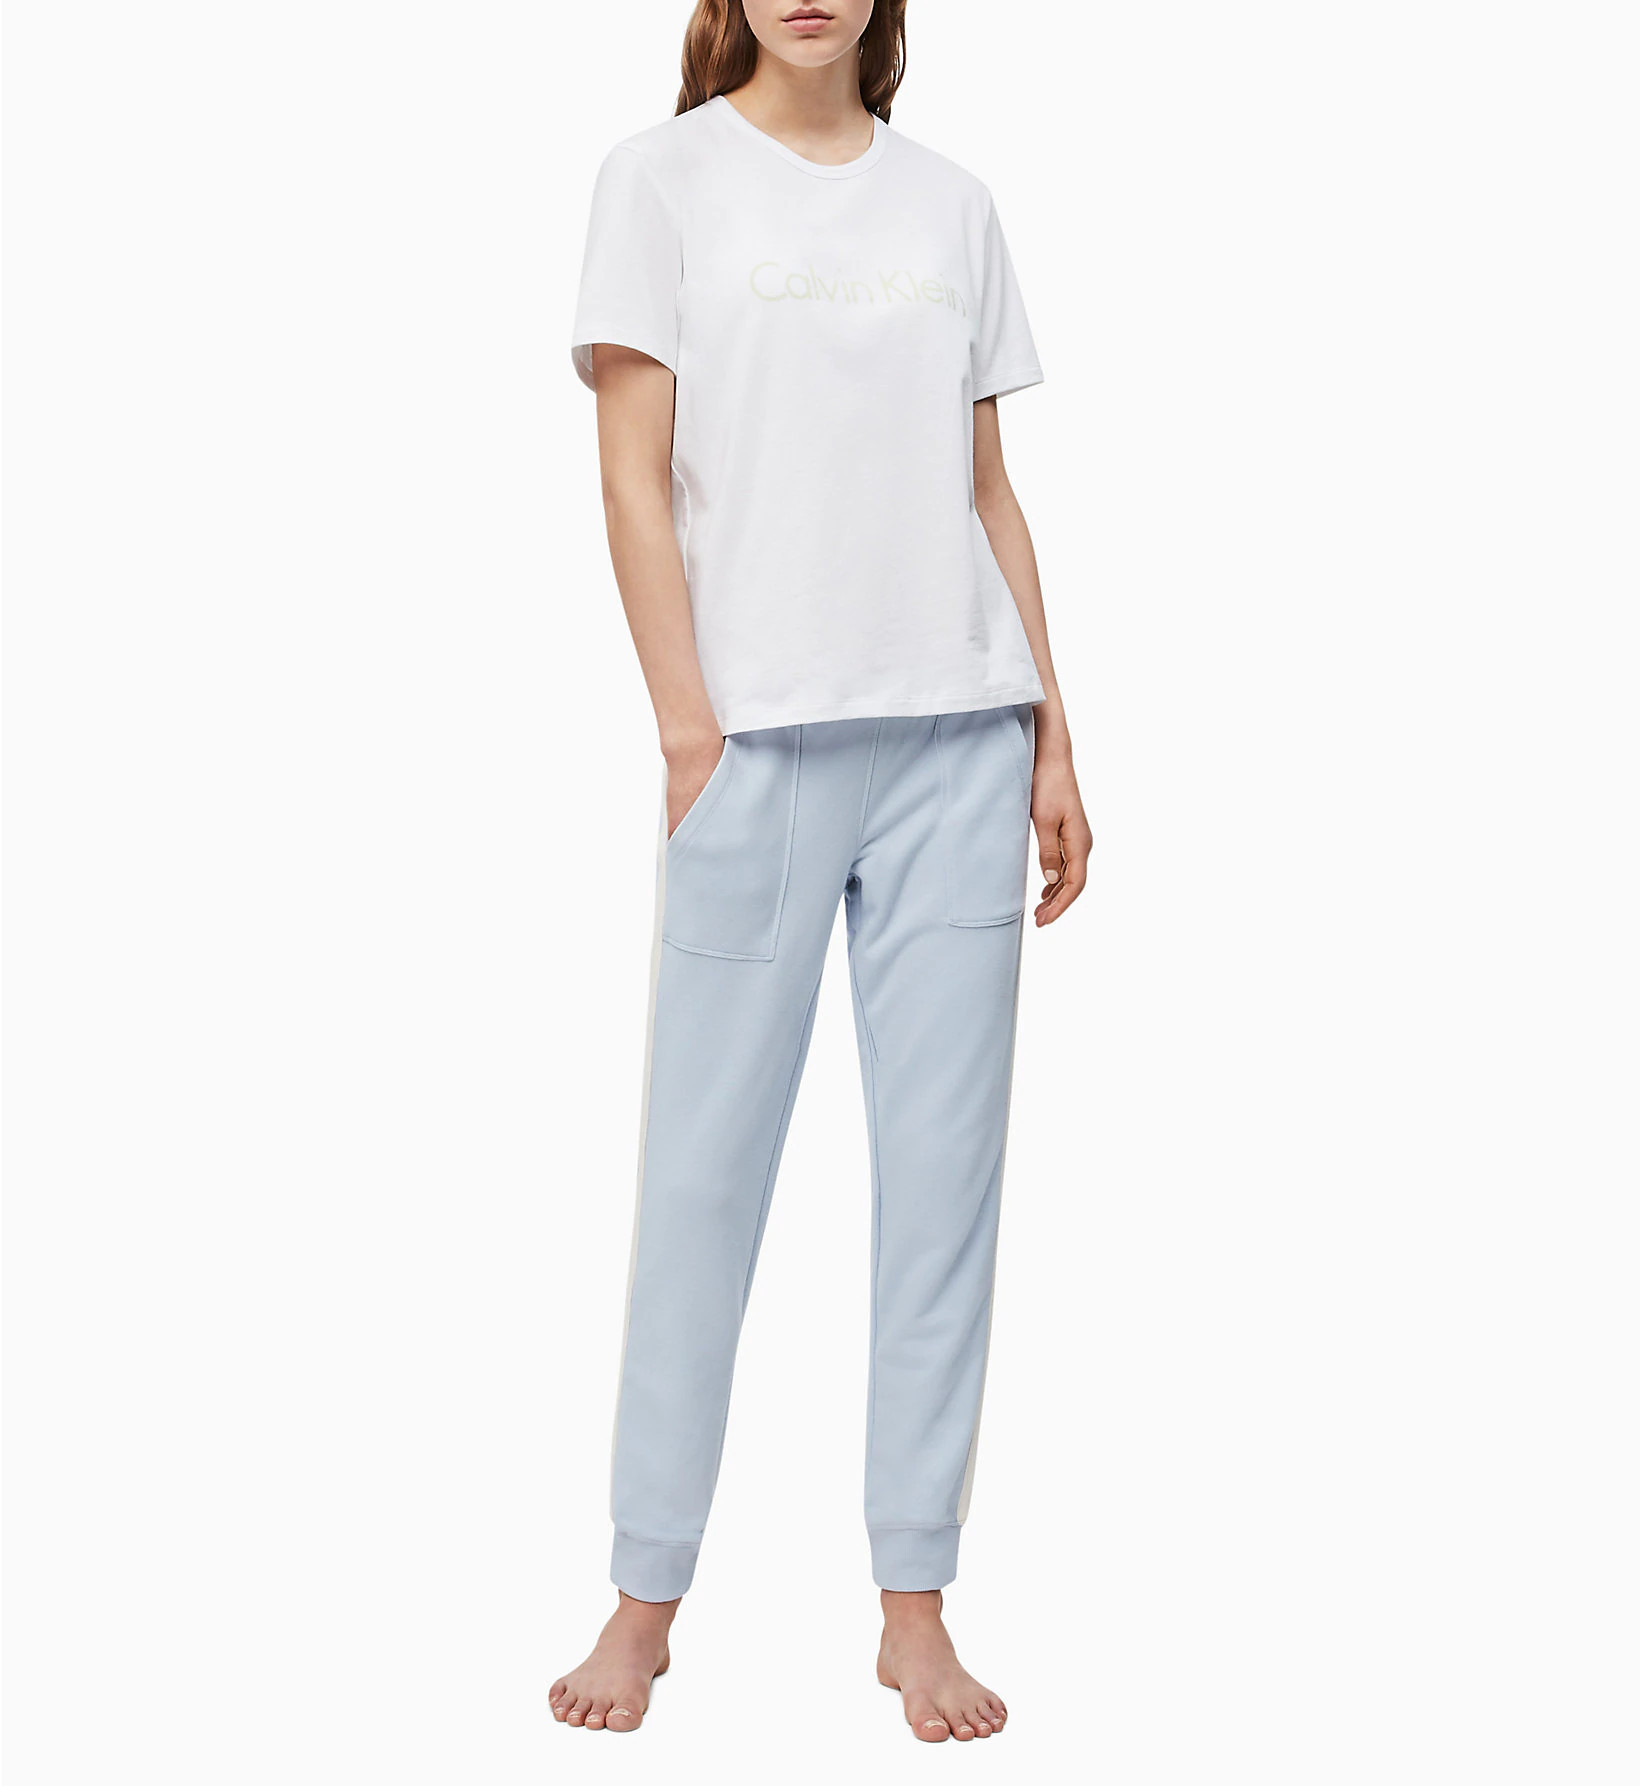 Dámské tričko model 8181545 bílá - Calvin Klein Velikost: M, Barvy: bílá